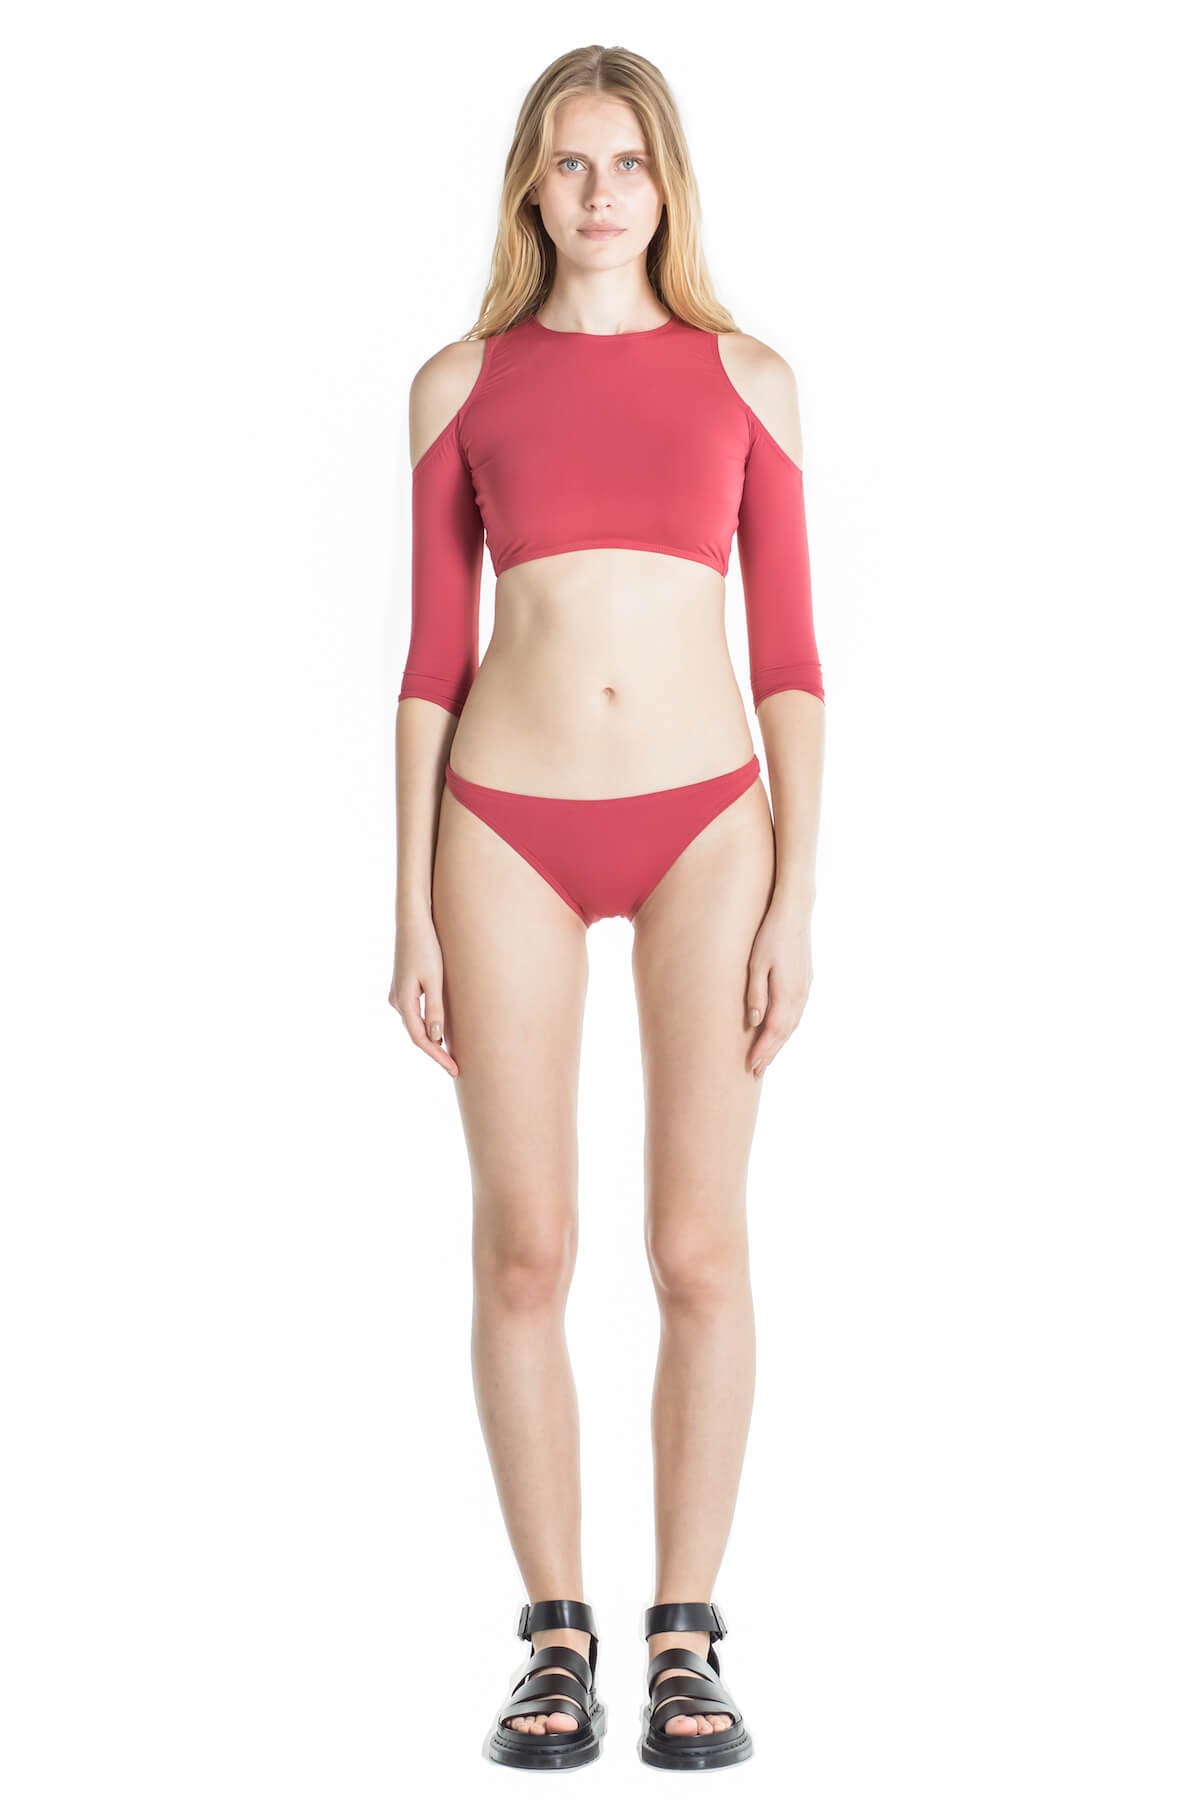 Clara long sleeve crop top bikini in Terracotta.